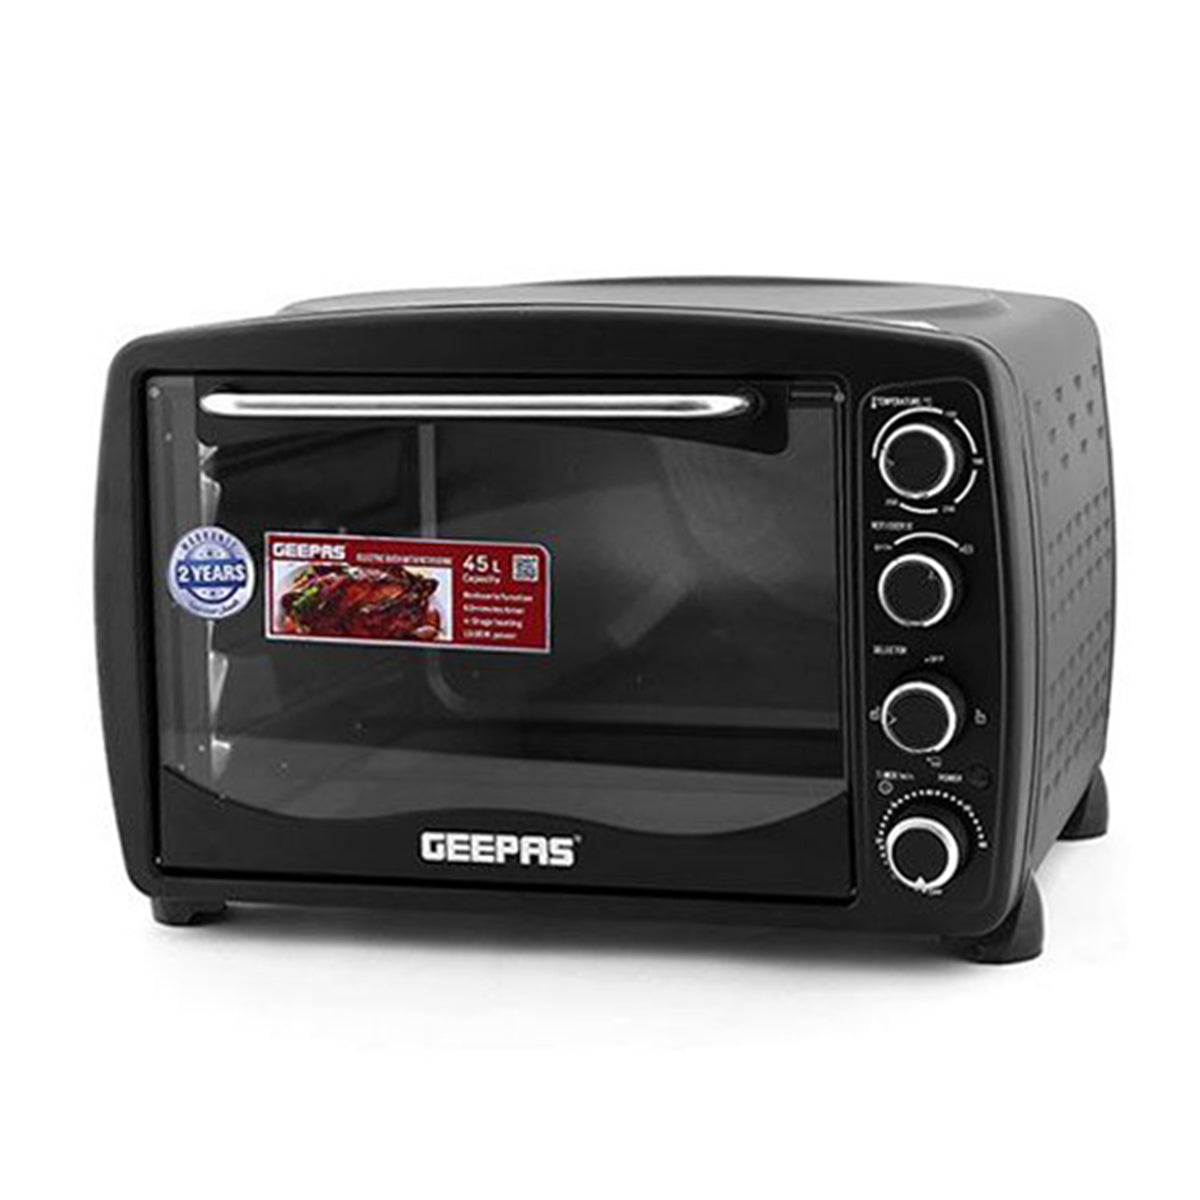 Geepas Electric Oven 1500W - GO4450